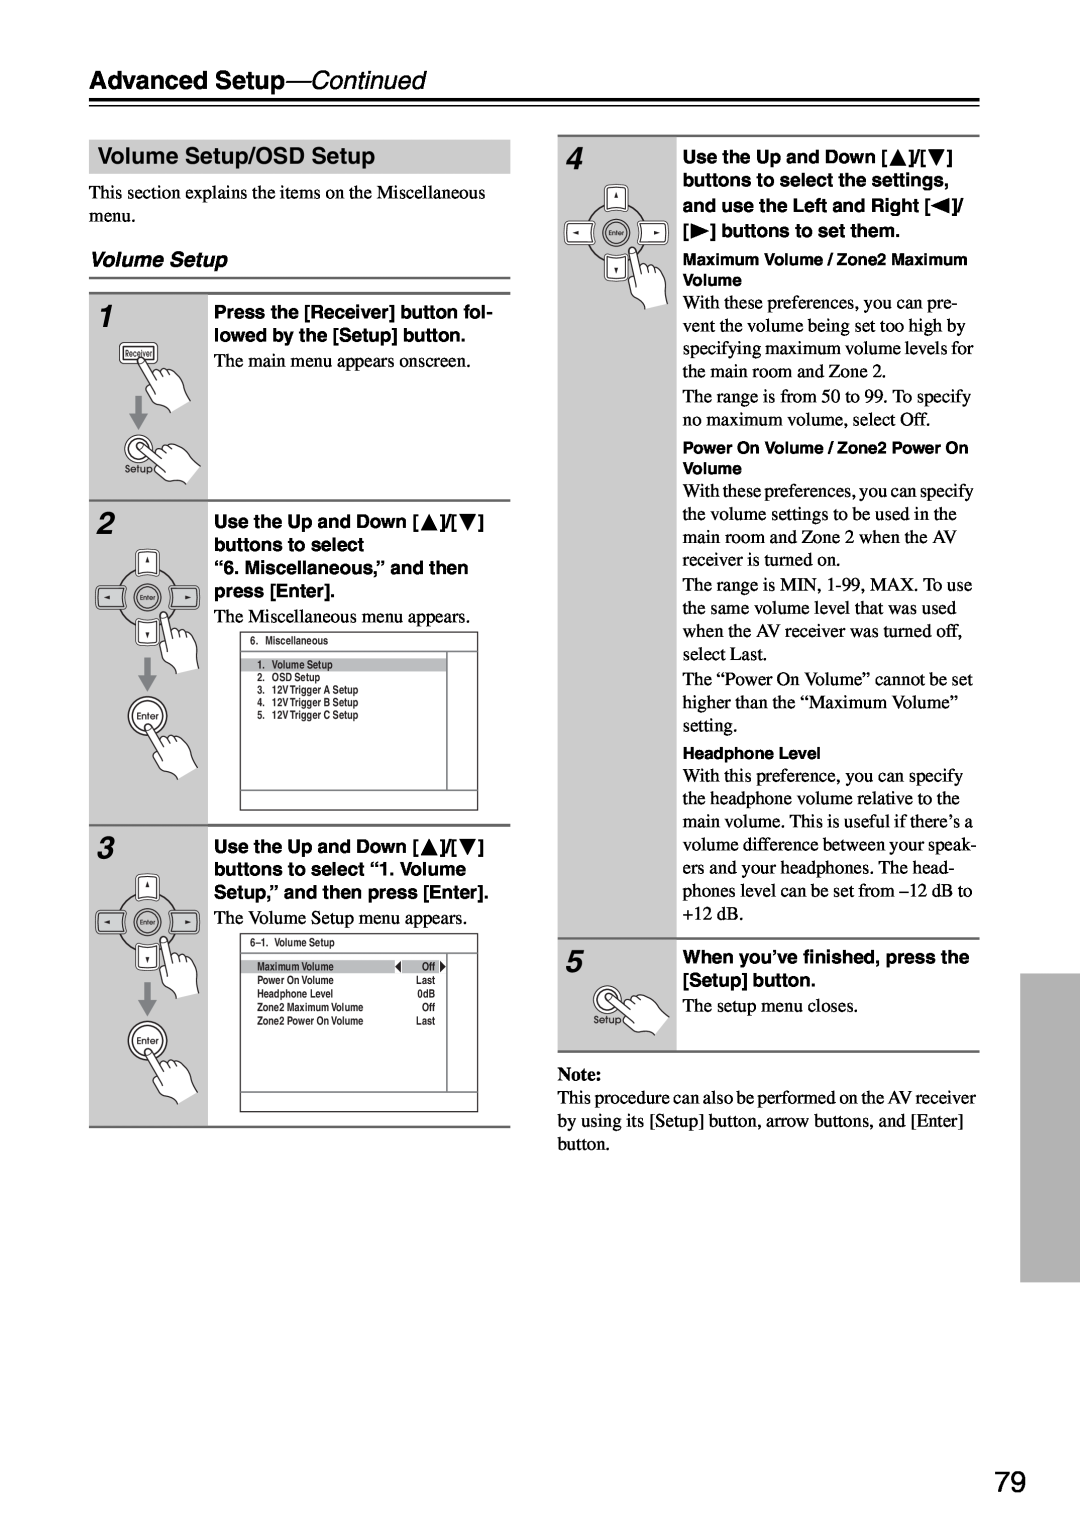 Integra DTR-5.8 instruction manual Volume Setup/OSD Setup, The Volume Setup menu appears, Advanced Setup-Continued 